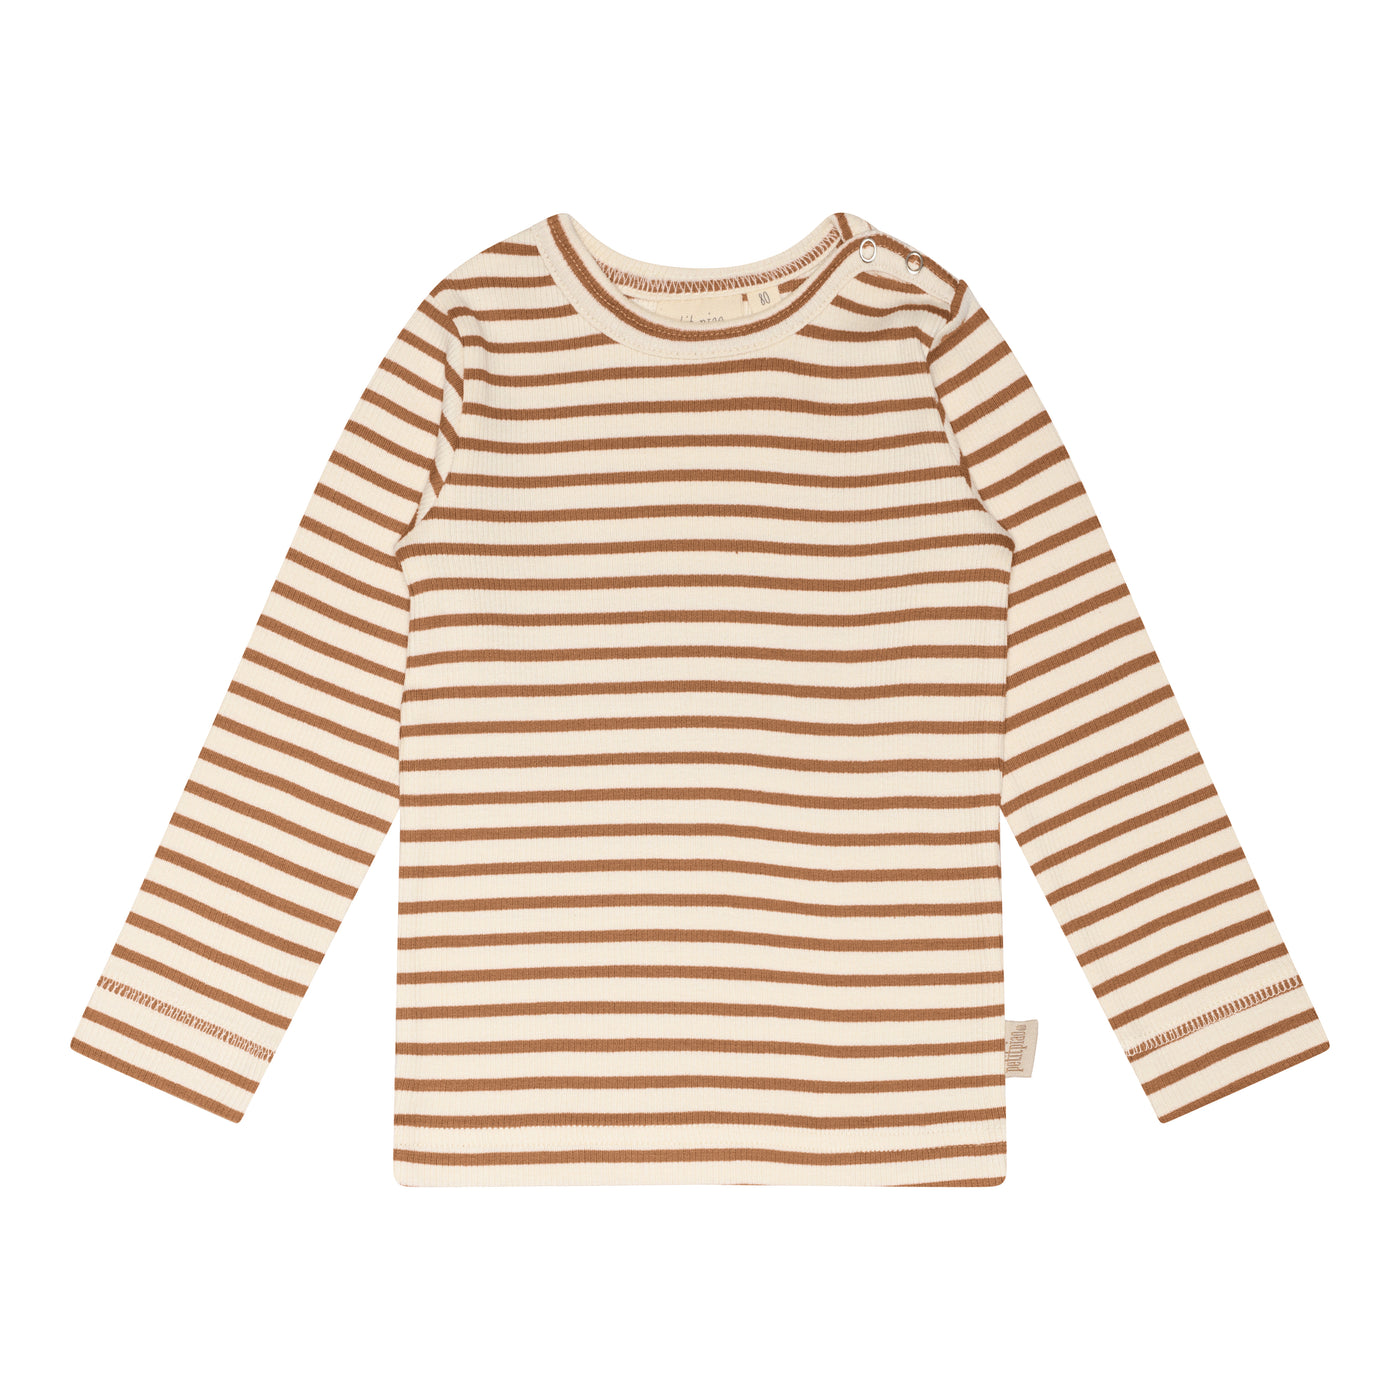 T-shirt L/S Modal Striped Caramel.